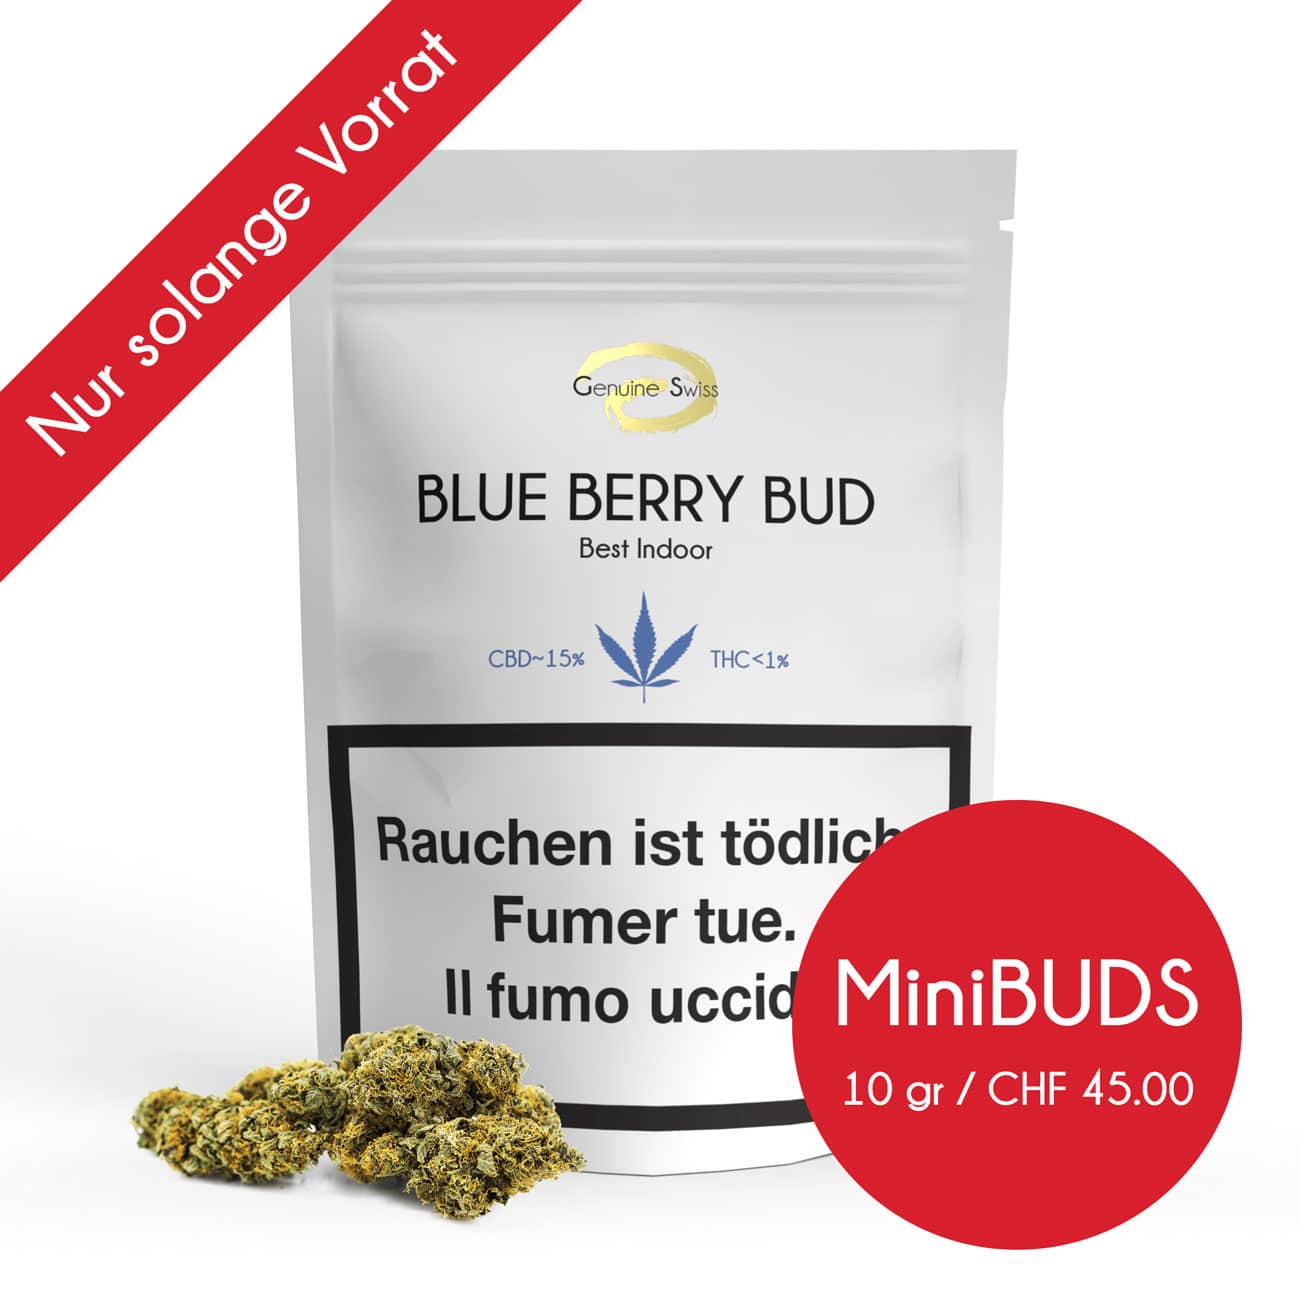 Genuine Swiss Blue Berry Minibuds, Cannabis